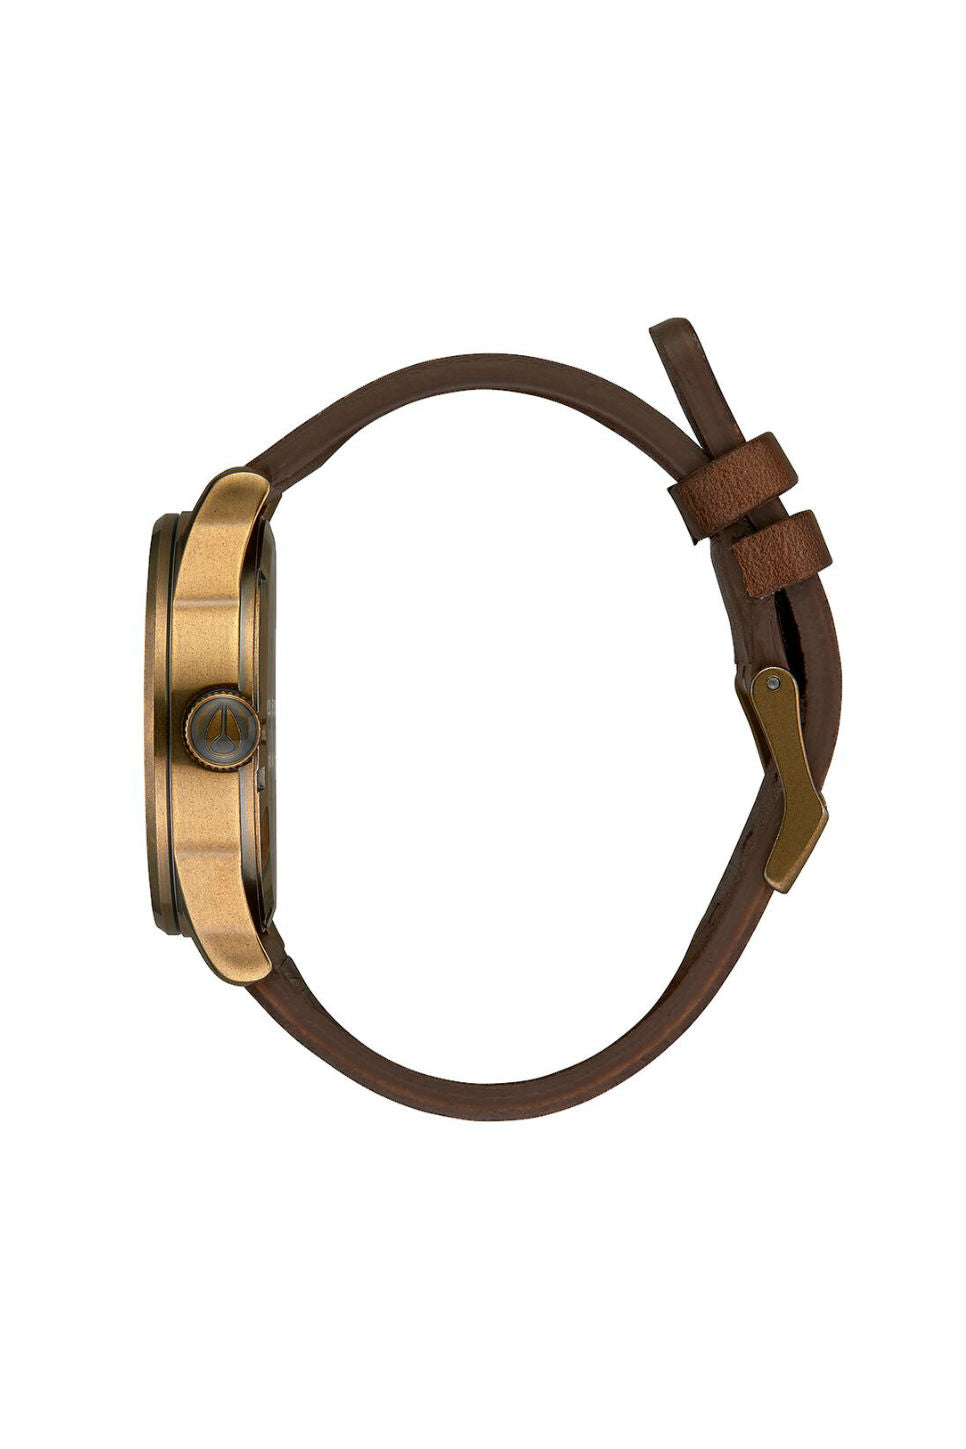 Nixon - Sentry Leather Watch - Brass/Black/Brown - Side